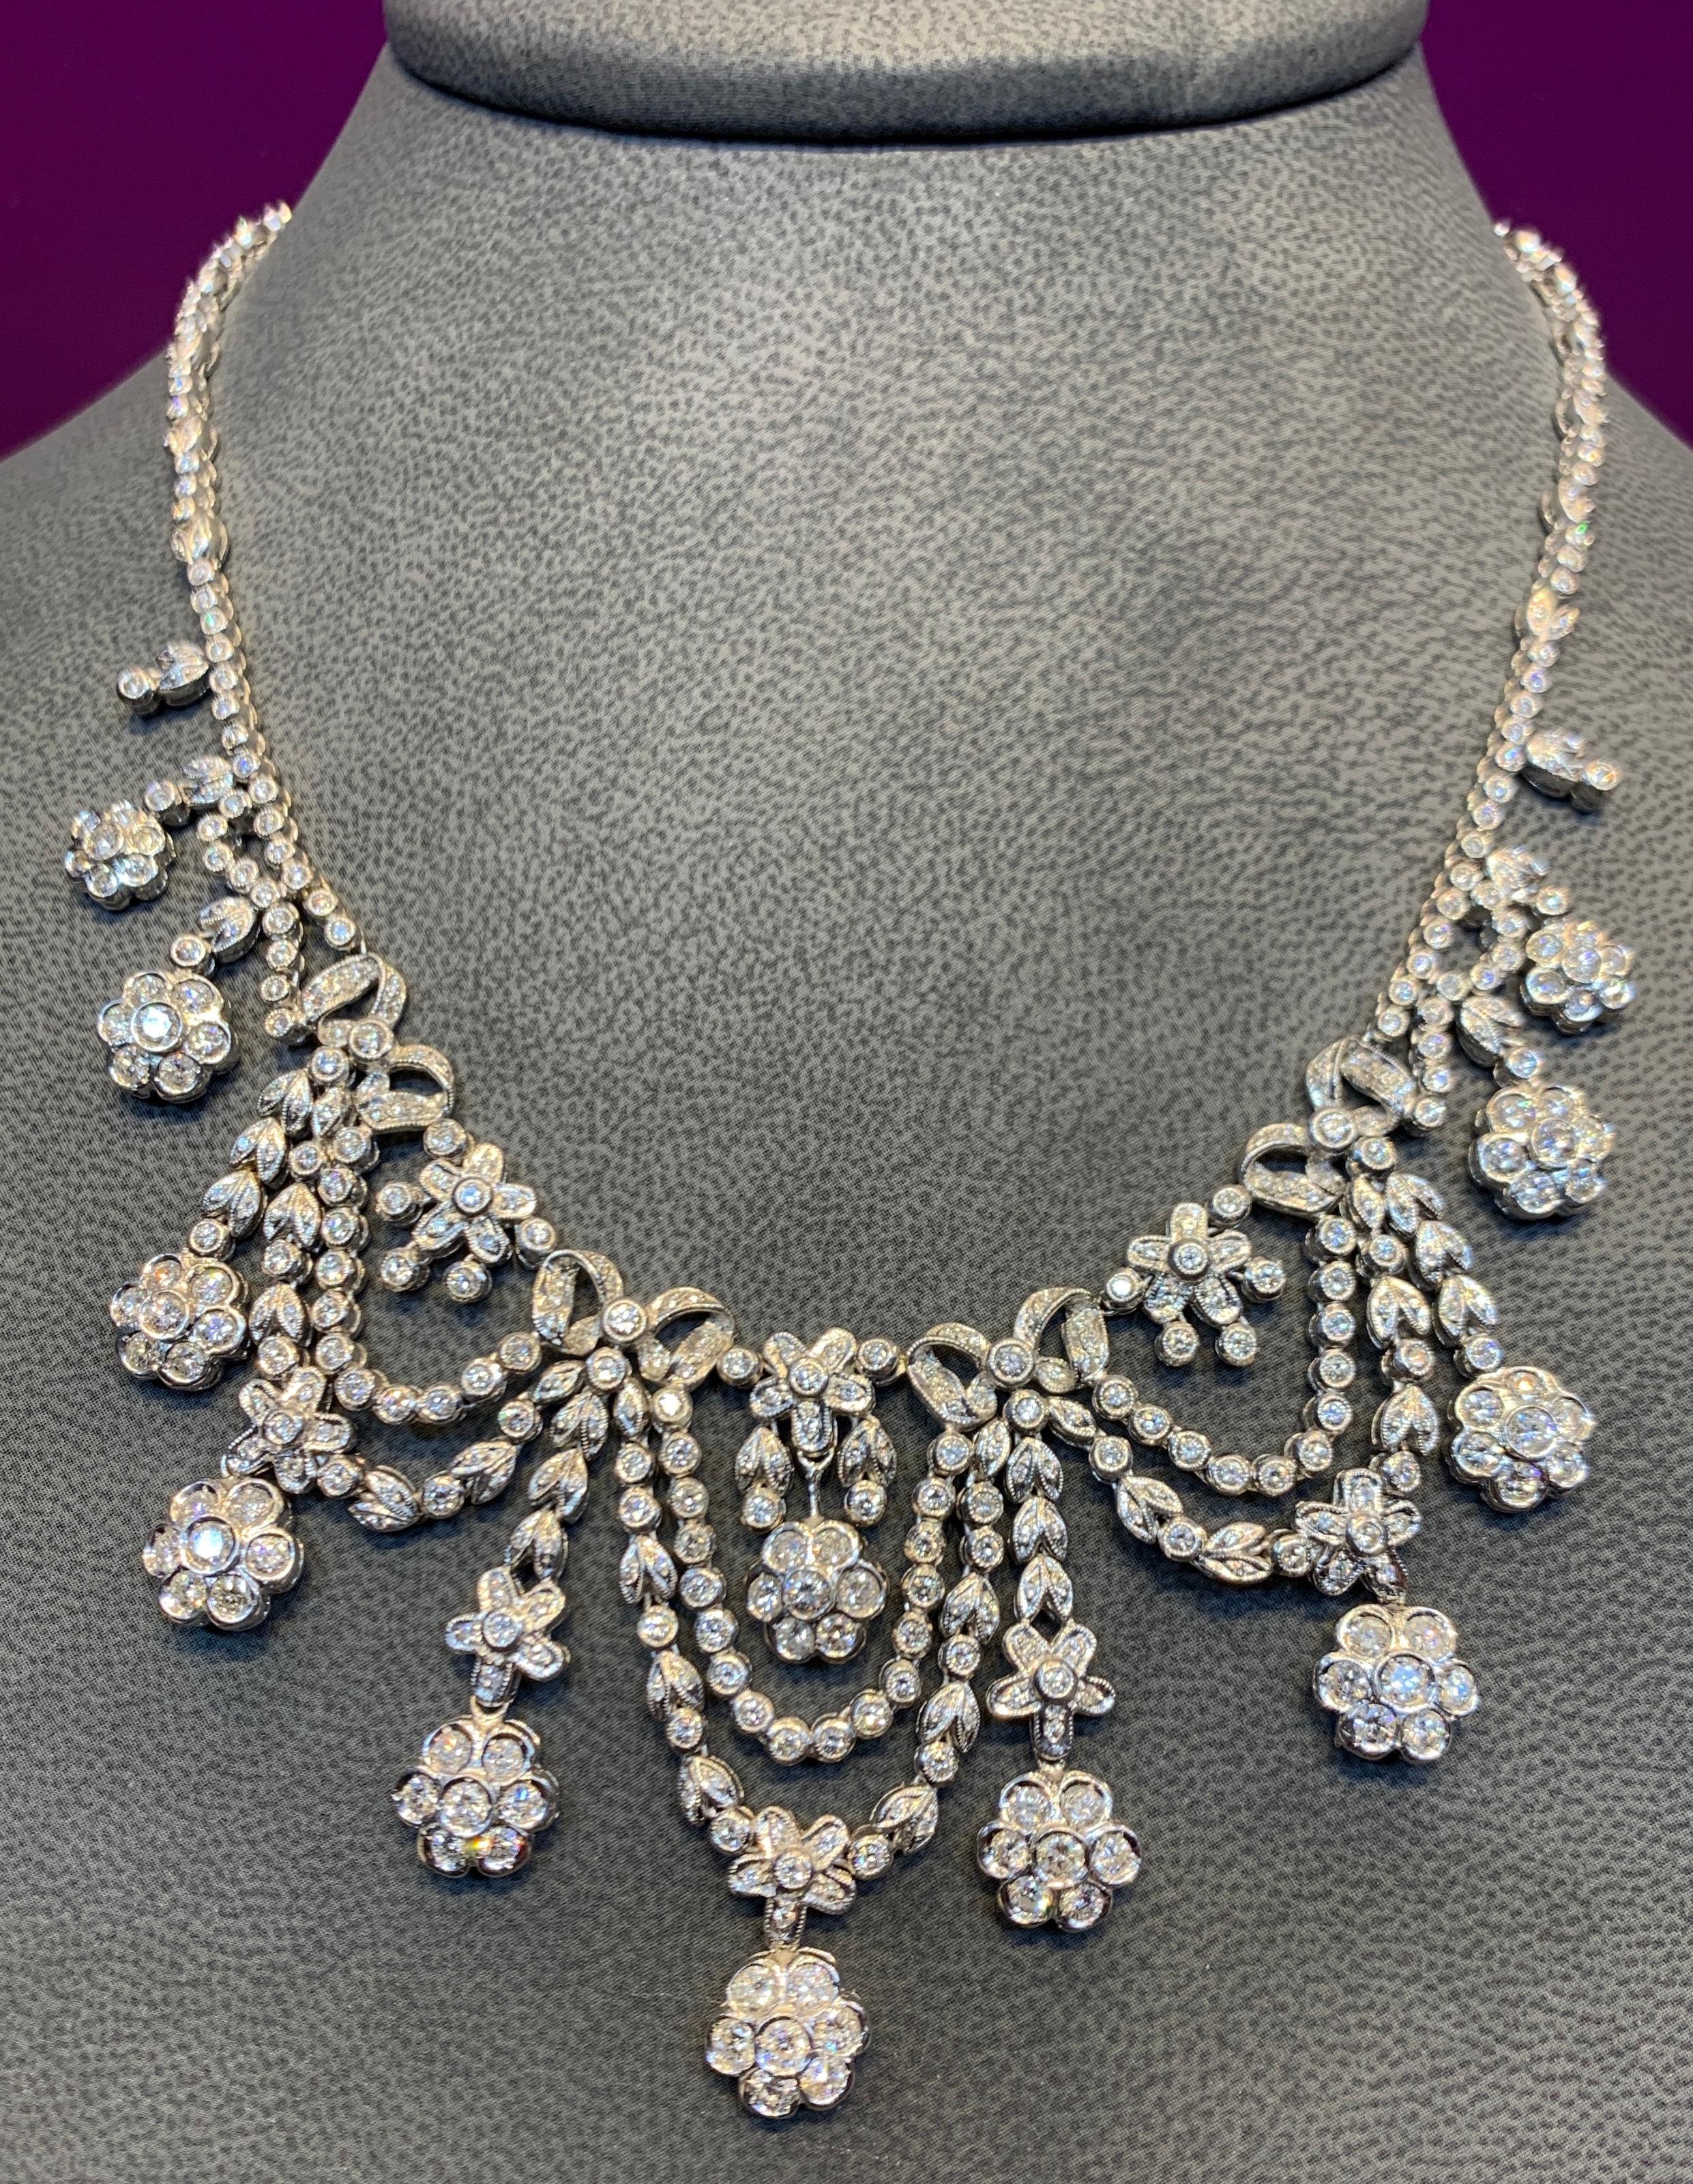 Floral Diamond Necklace, set in 18K White Gold 
Measurements: 16